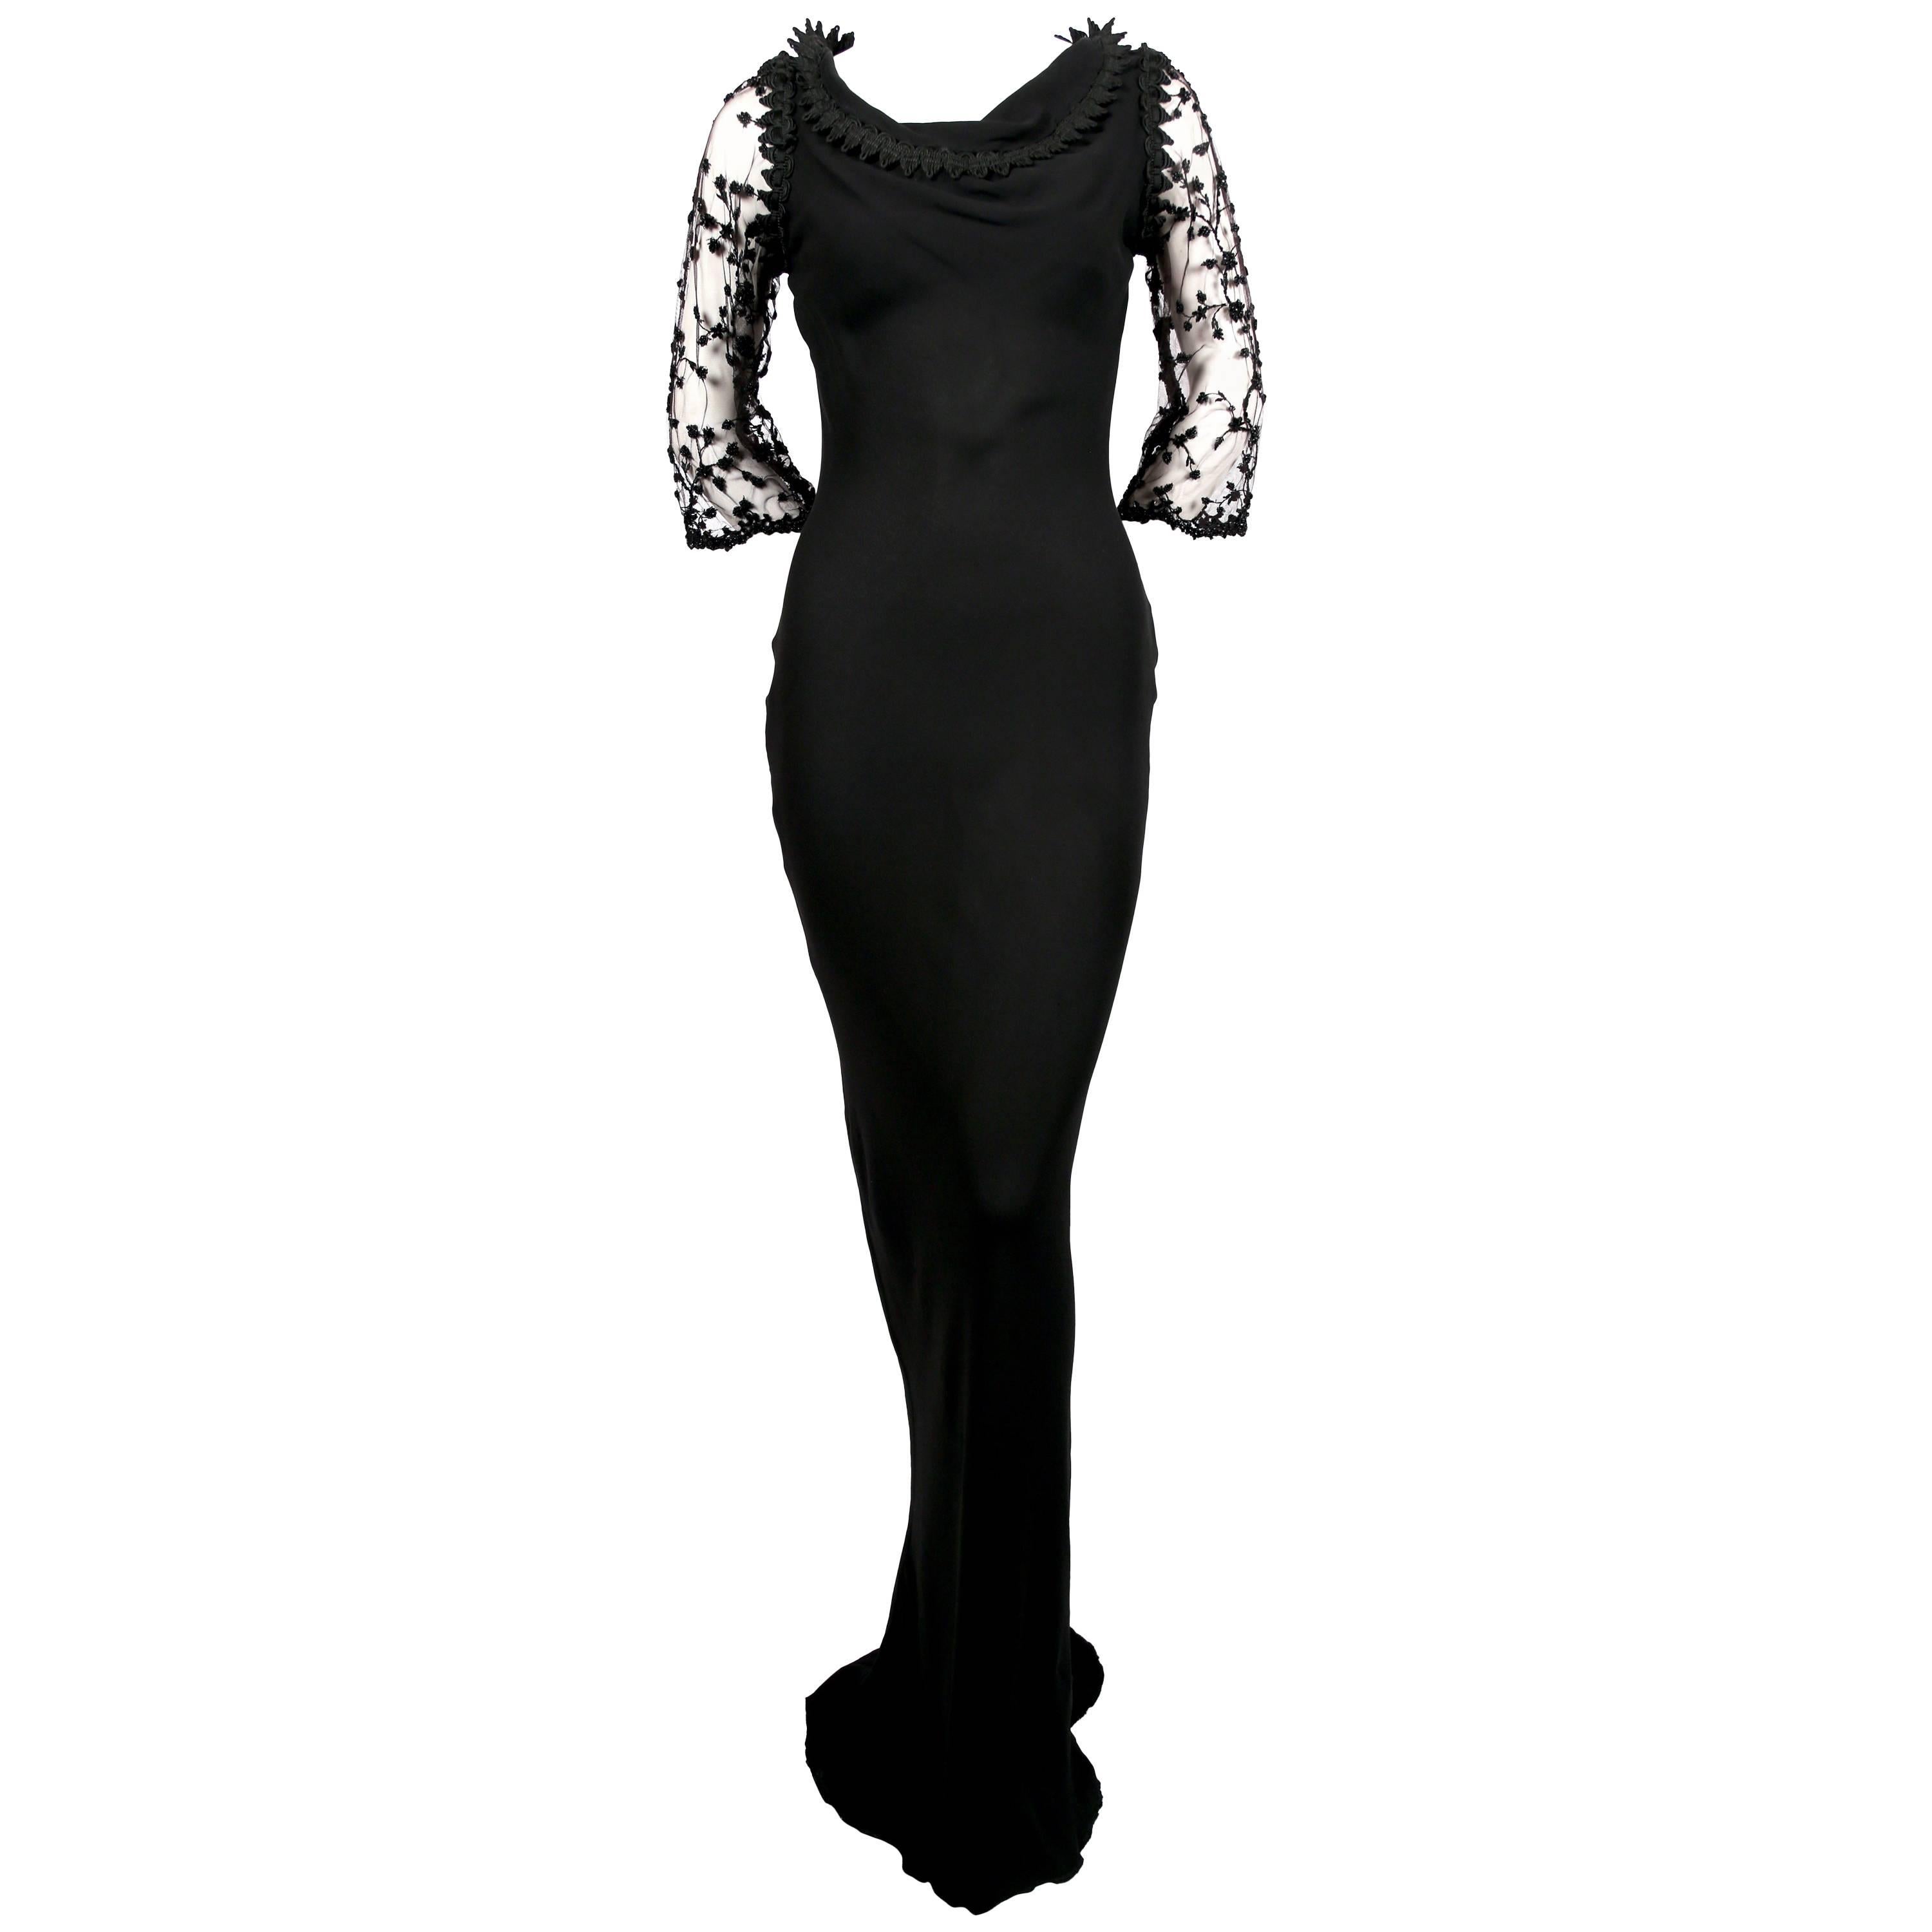 Yves Saint Laurent silk mousseline bias cut gown with beading